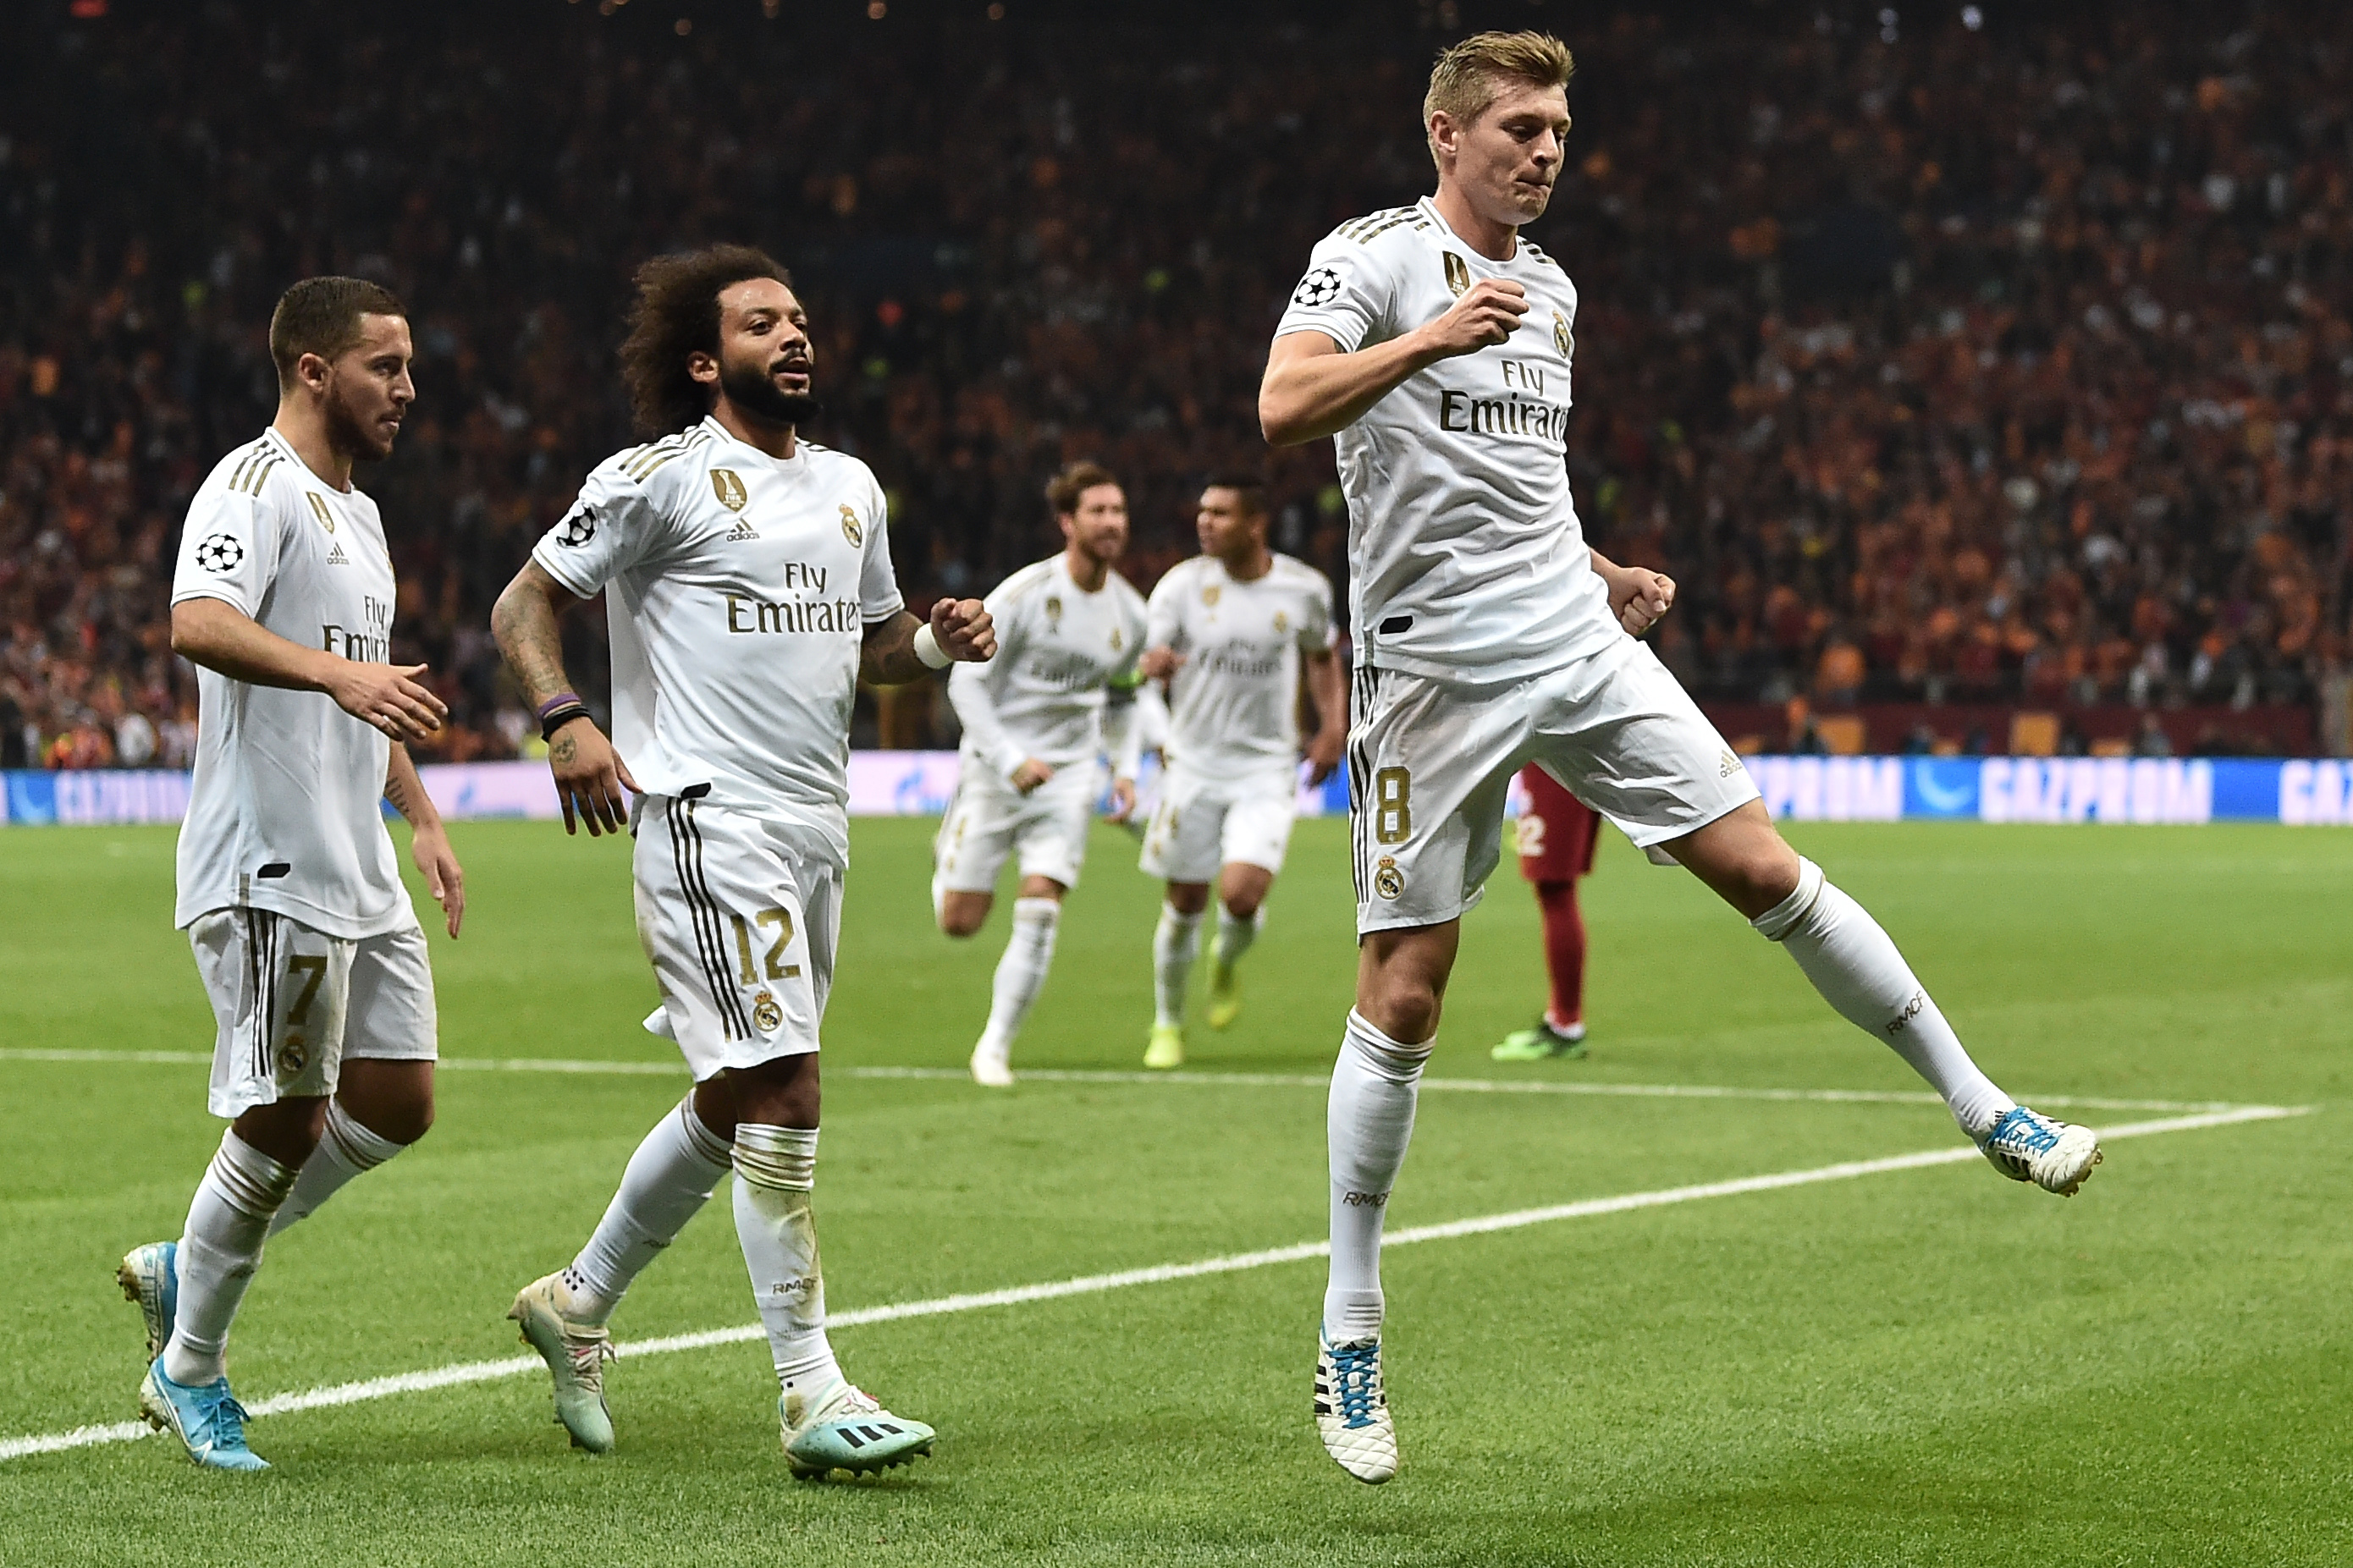 Real Madrid venció al Galatasaray en Champions League tras ocho meses de sequía